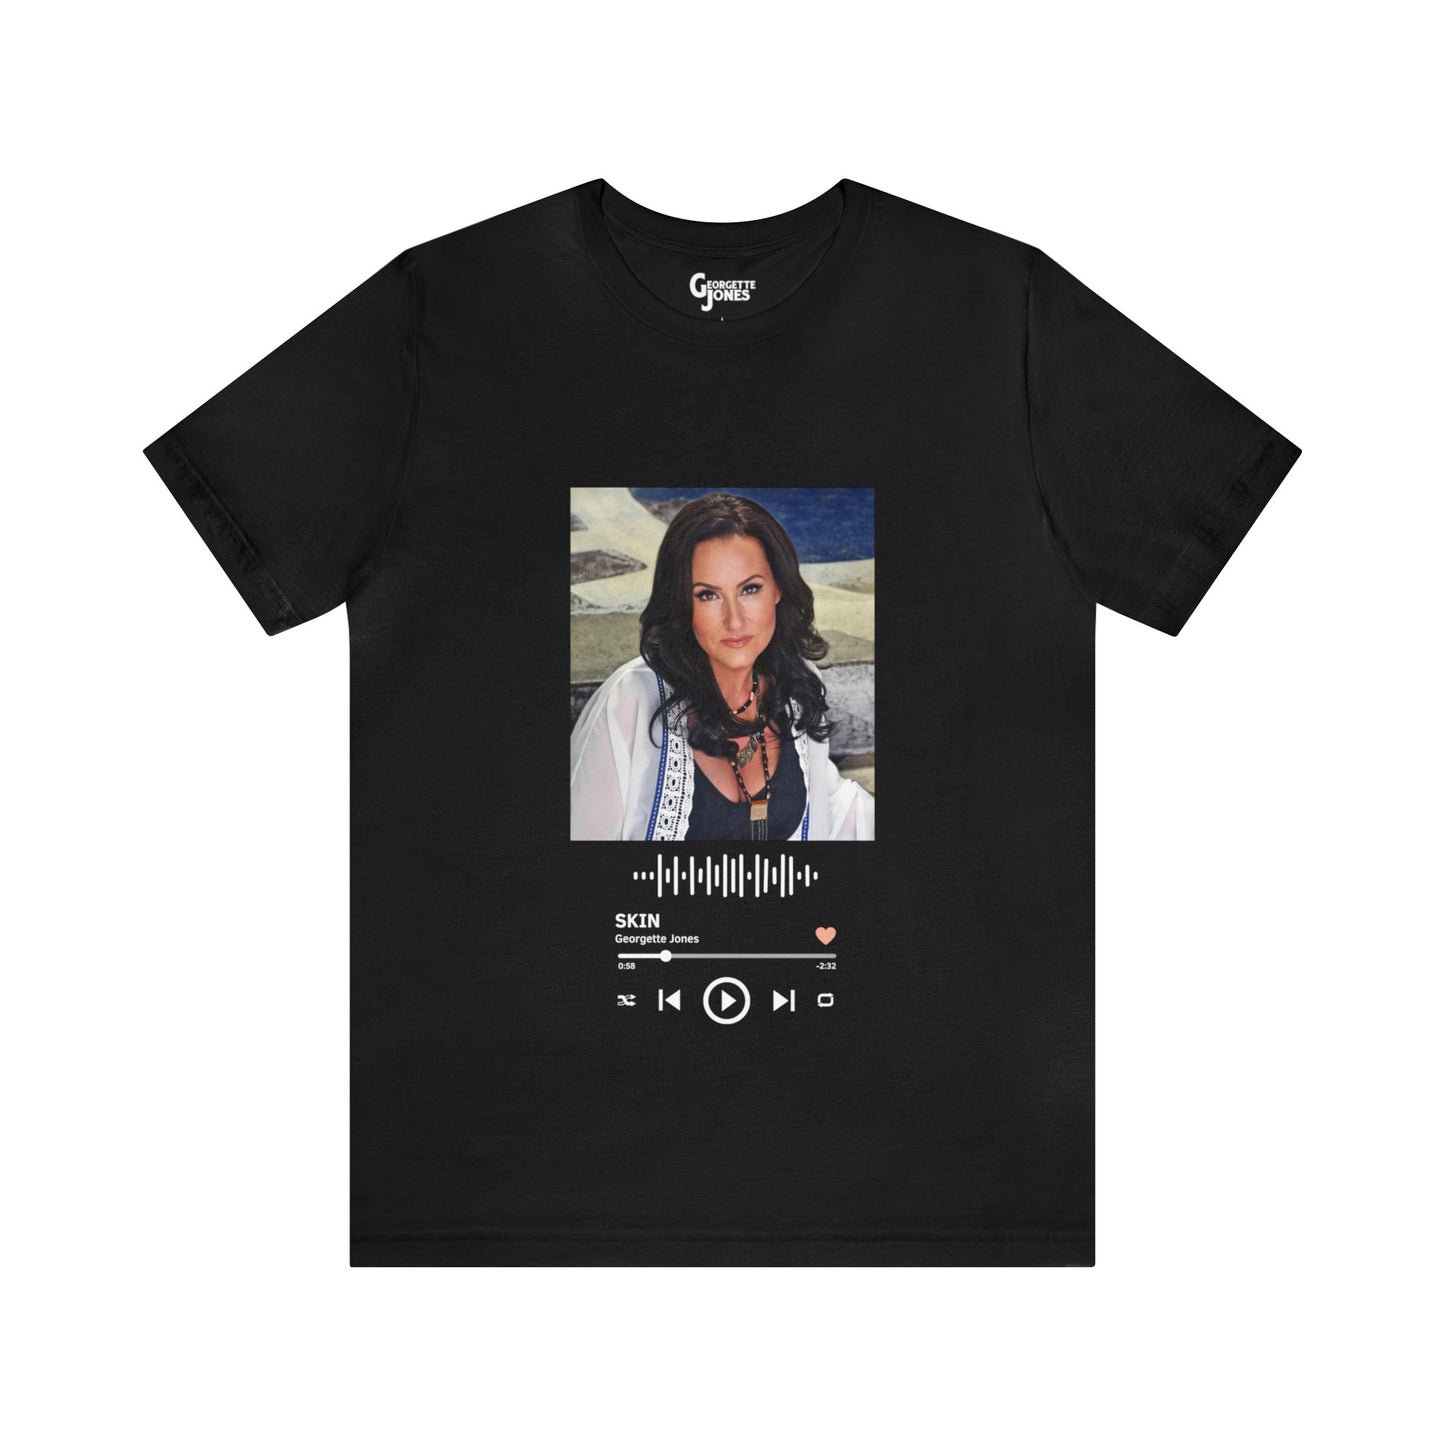 Georgette Jones "SKIN" Unisex T-Shirt